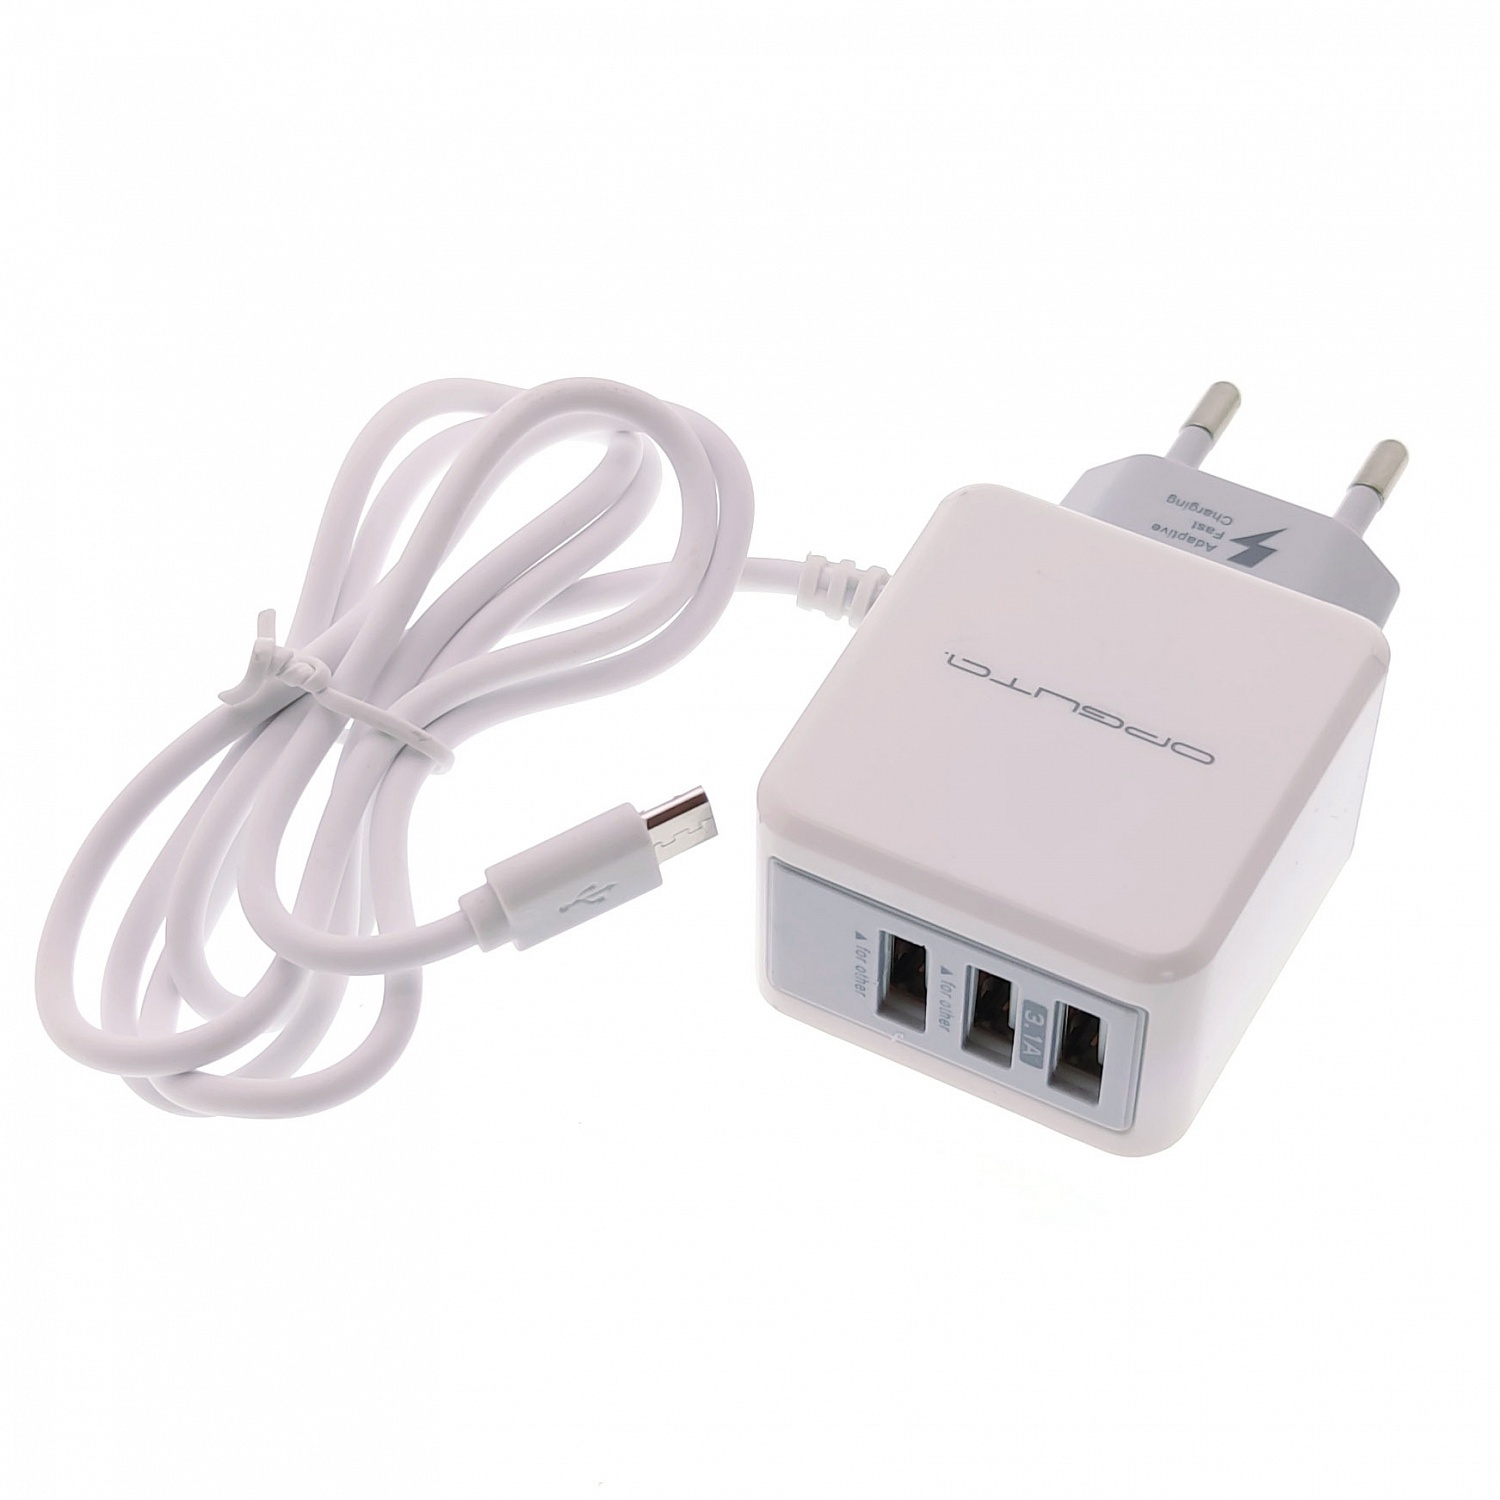 Блок пит USB сетевой  Орбита OT-APU52 белый кабель Micro USB (3*USB, 5В, 2,4A, 80см)